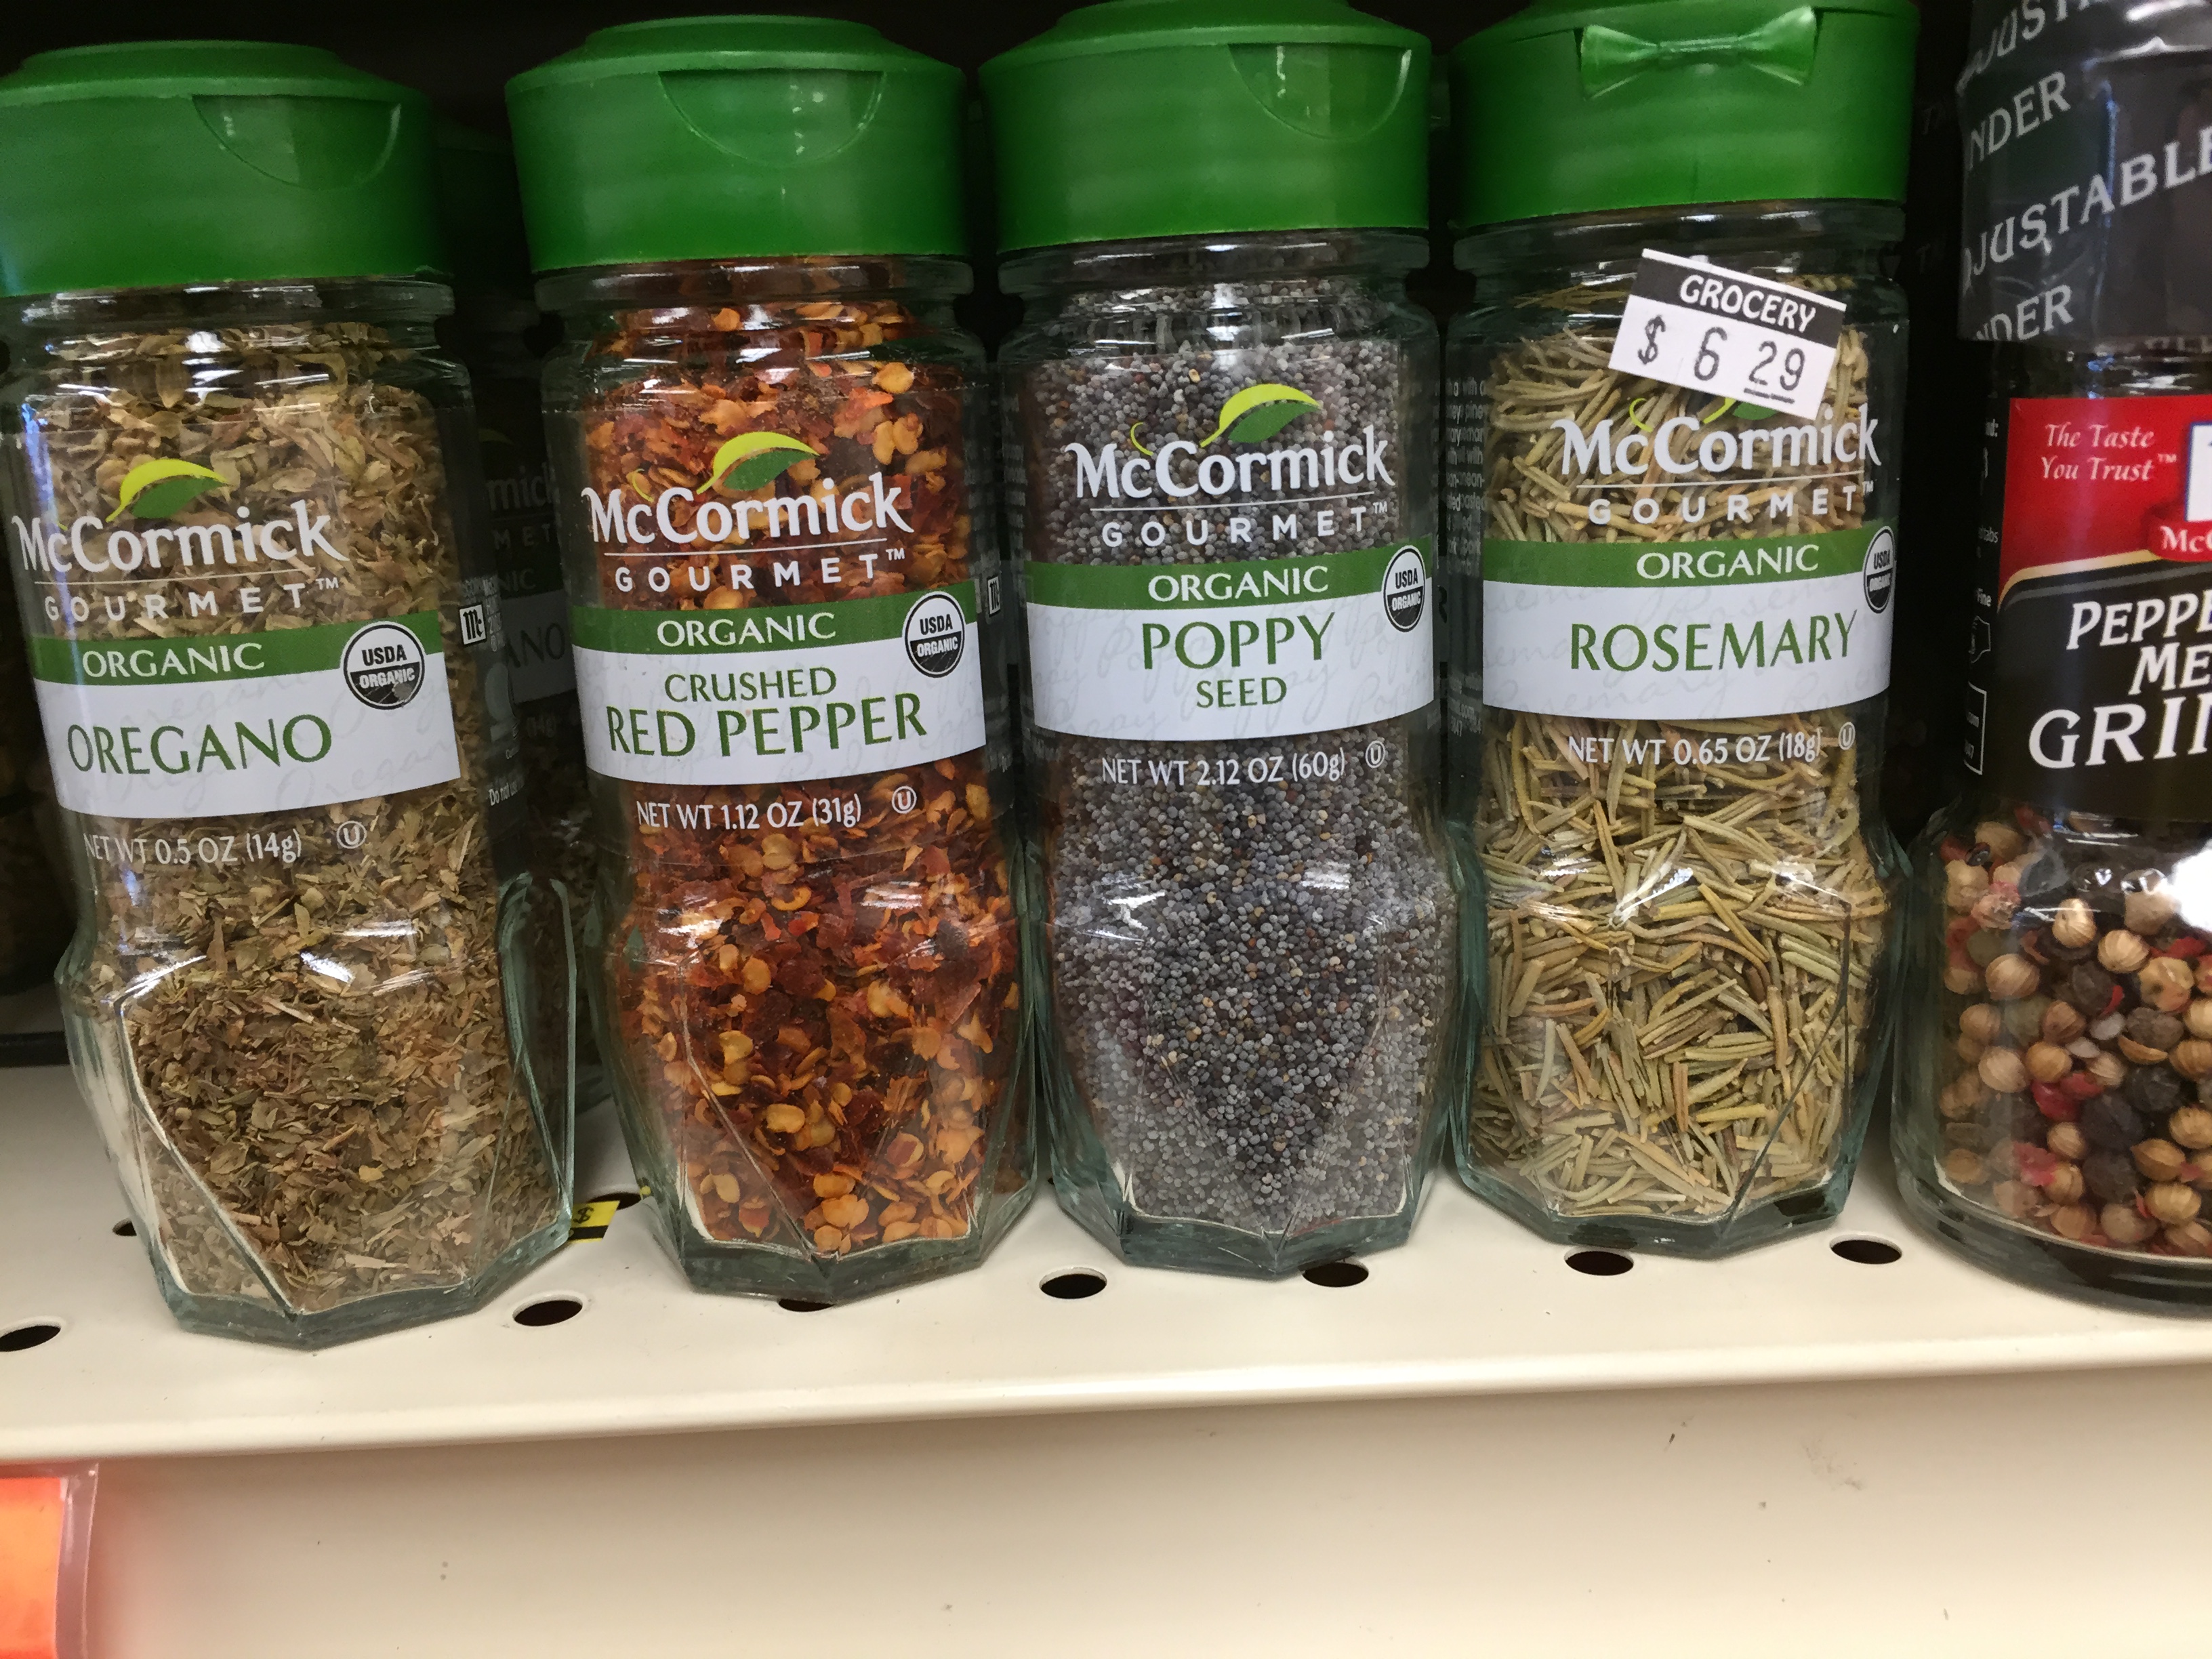 https://foodscienceinstitute.files.wordpress.com/2015/09/mccormick-spices.jpg